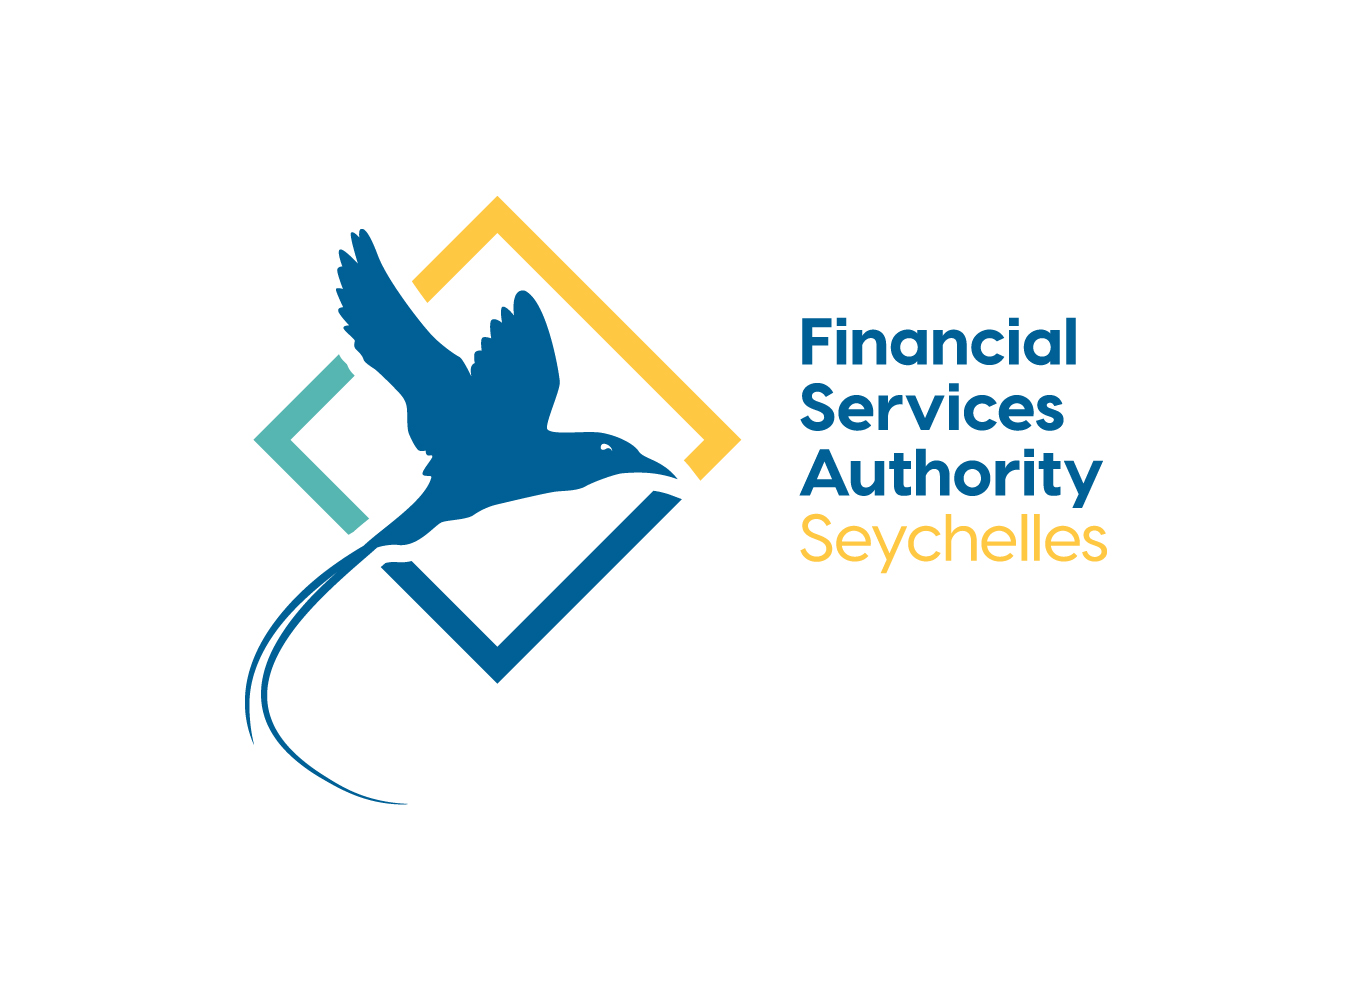 Financial Services Authority Seychelles Wordmark Logo Full Color RGB 1jpg